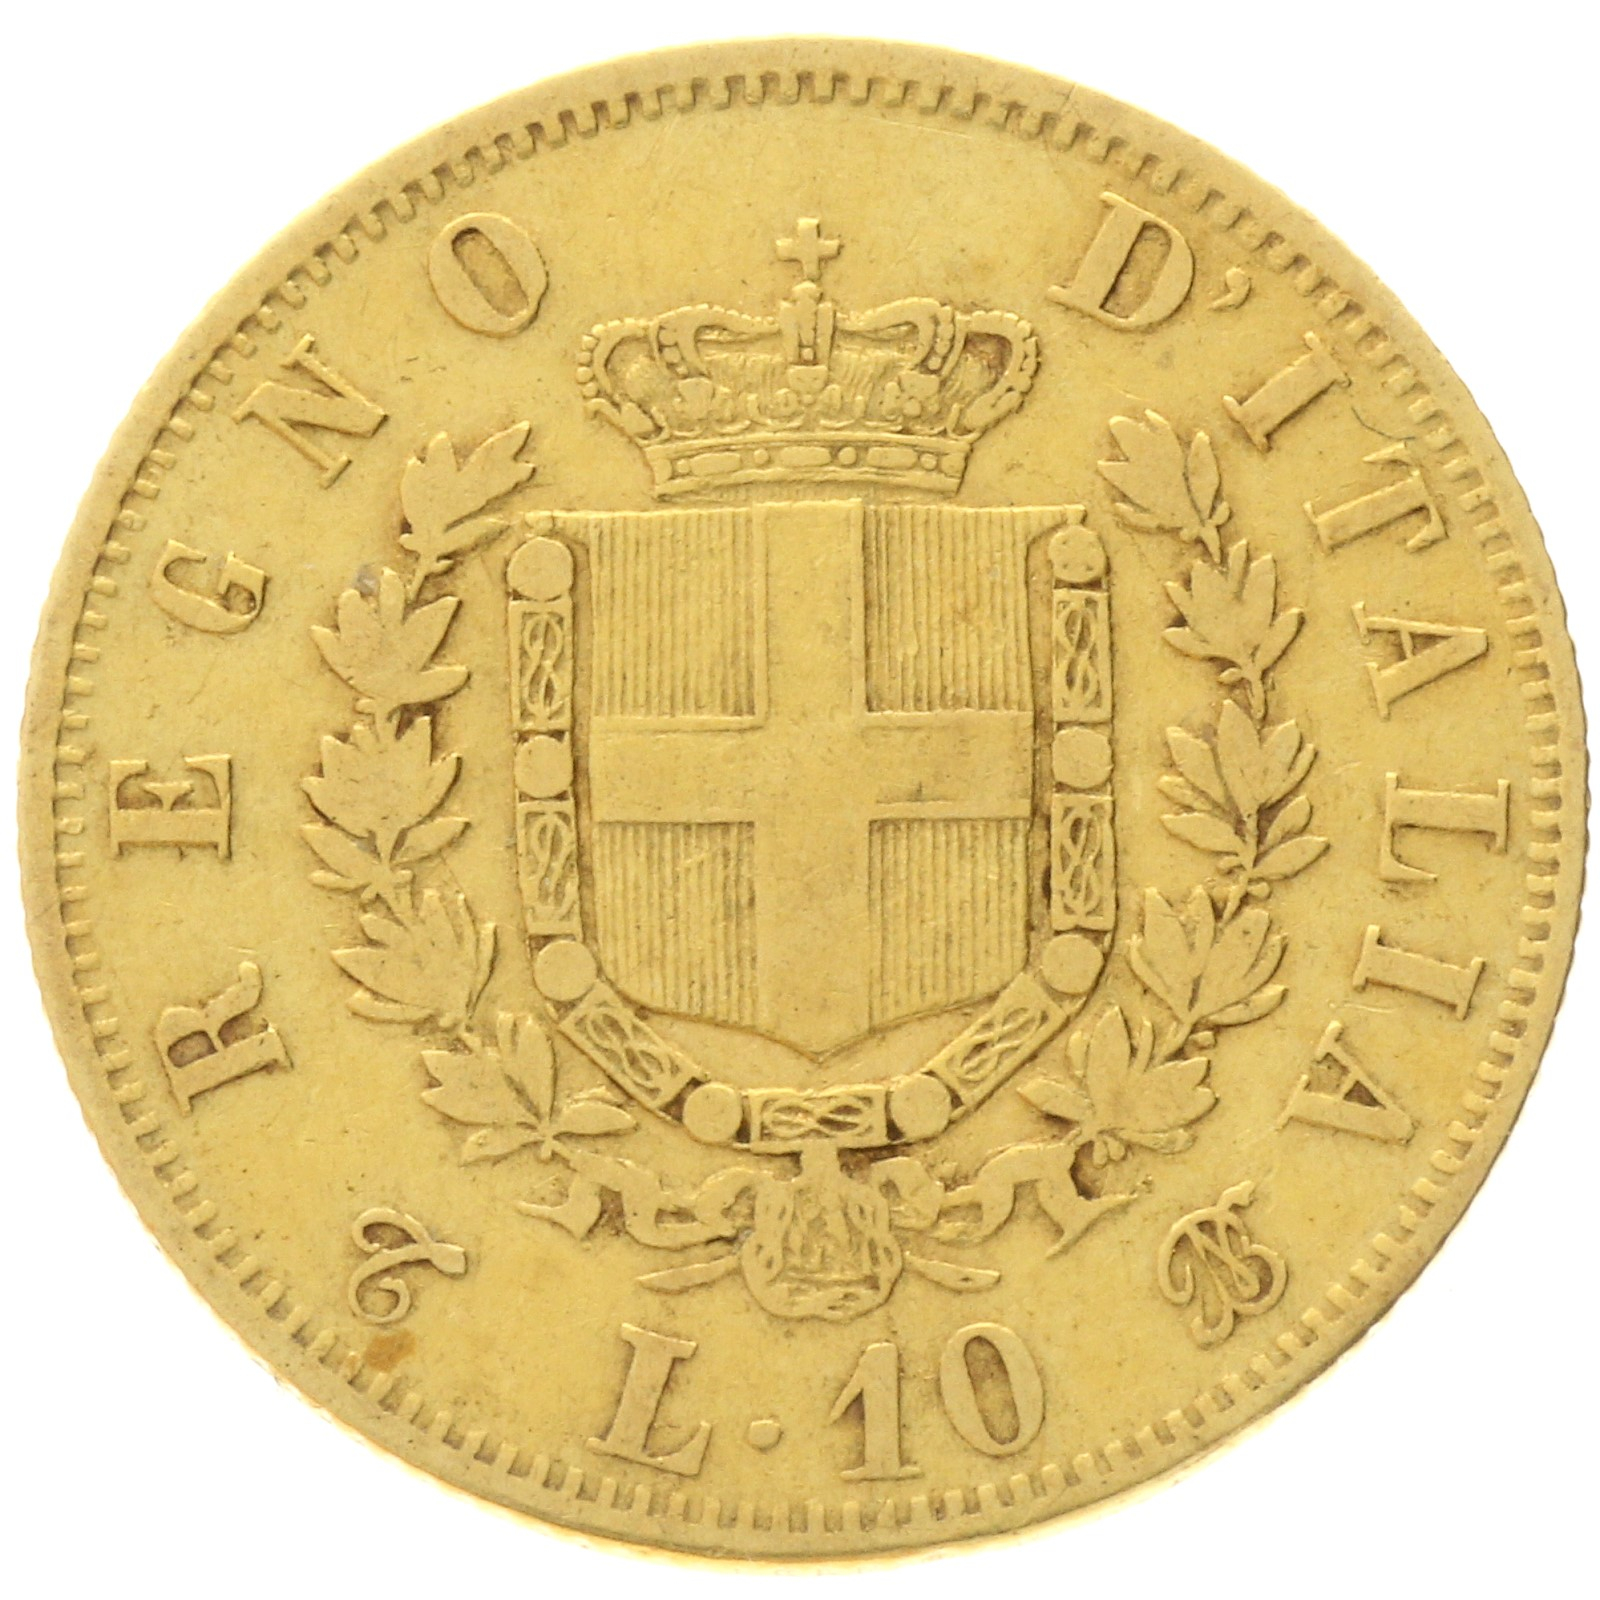 Italy - 10 lire - 1863 - TBN -  Vittorio Emanuele II